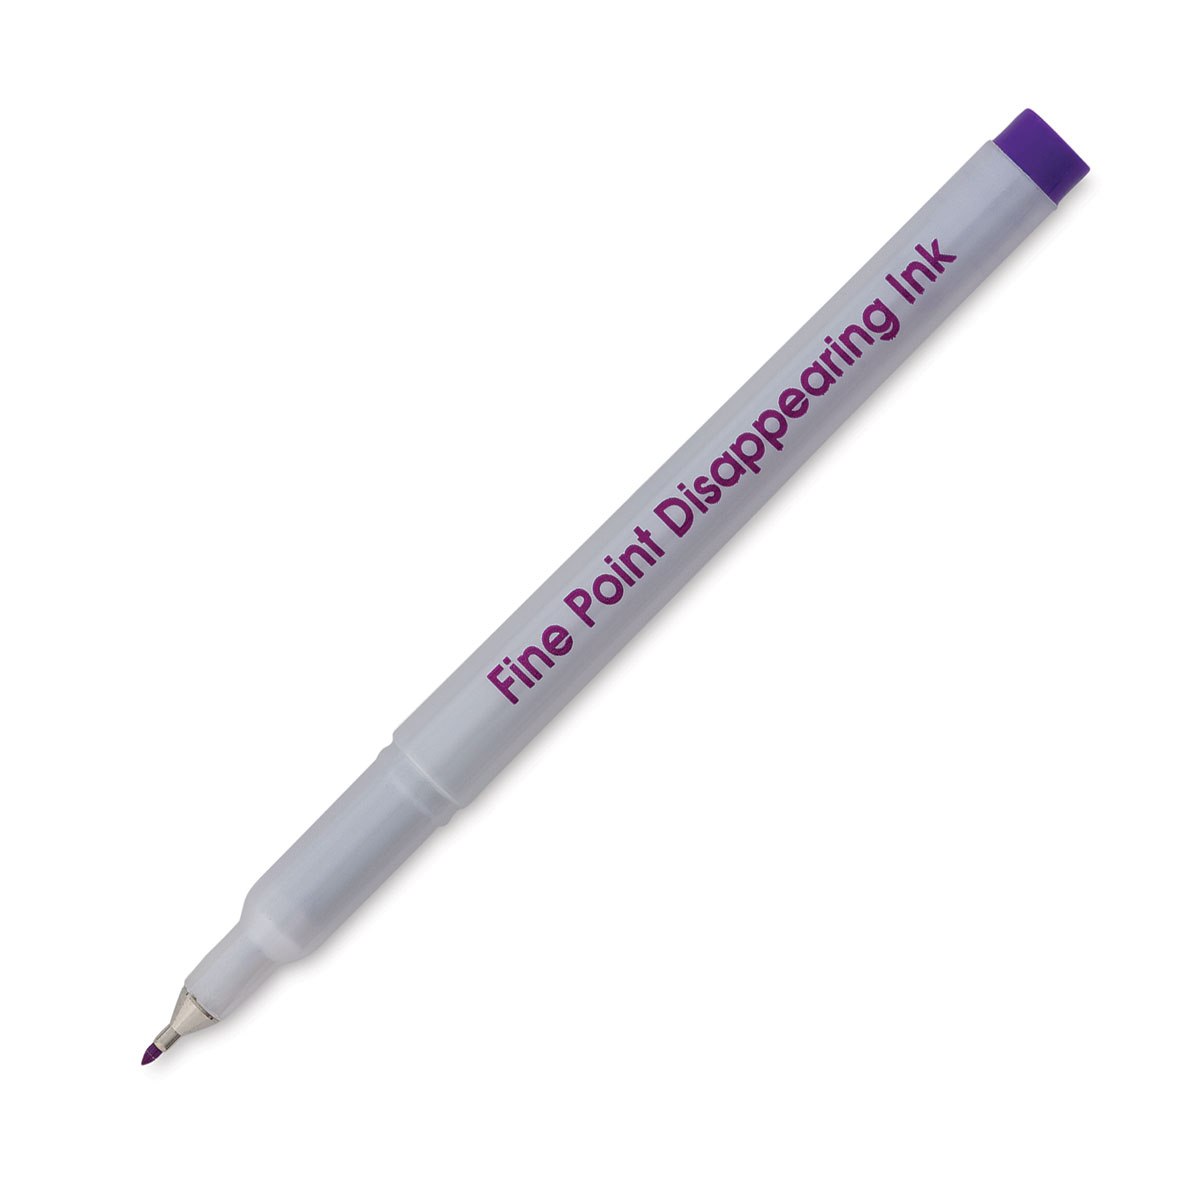 Dritz Disappearing Ink Marking Pen - WAWAK Sewing Supplies